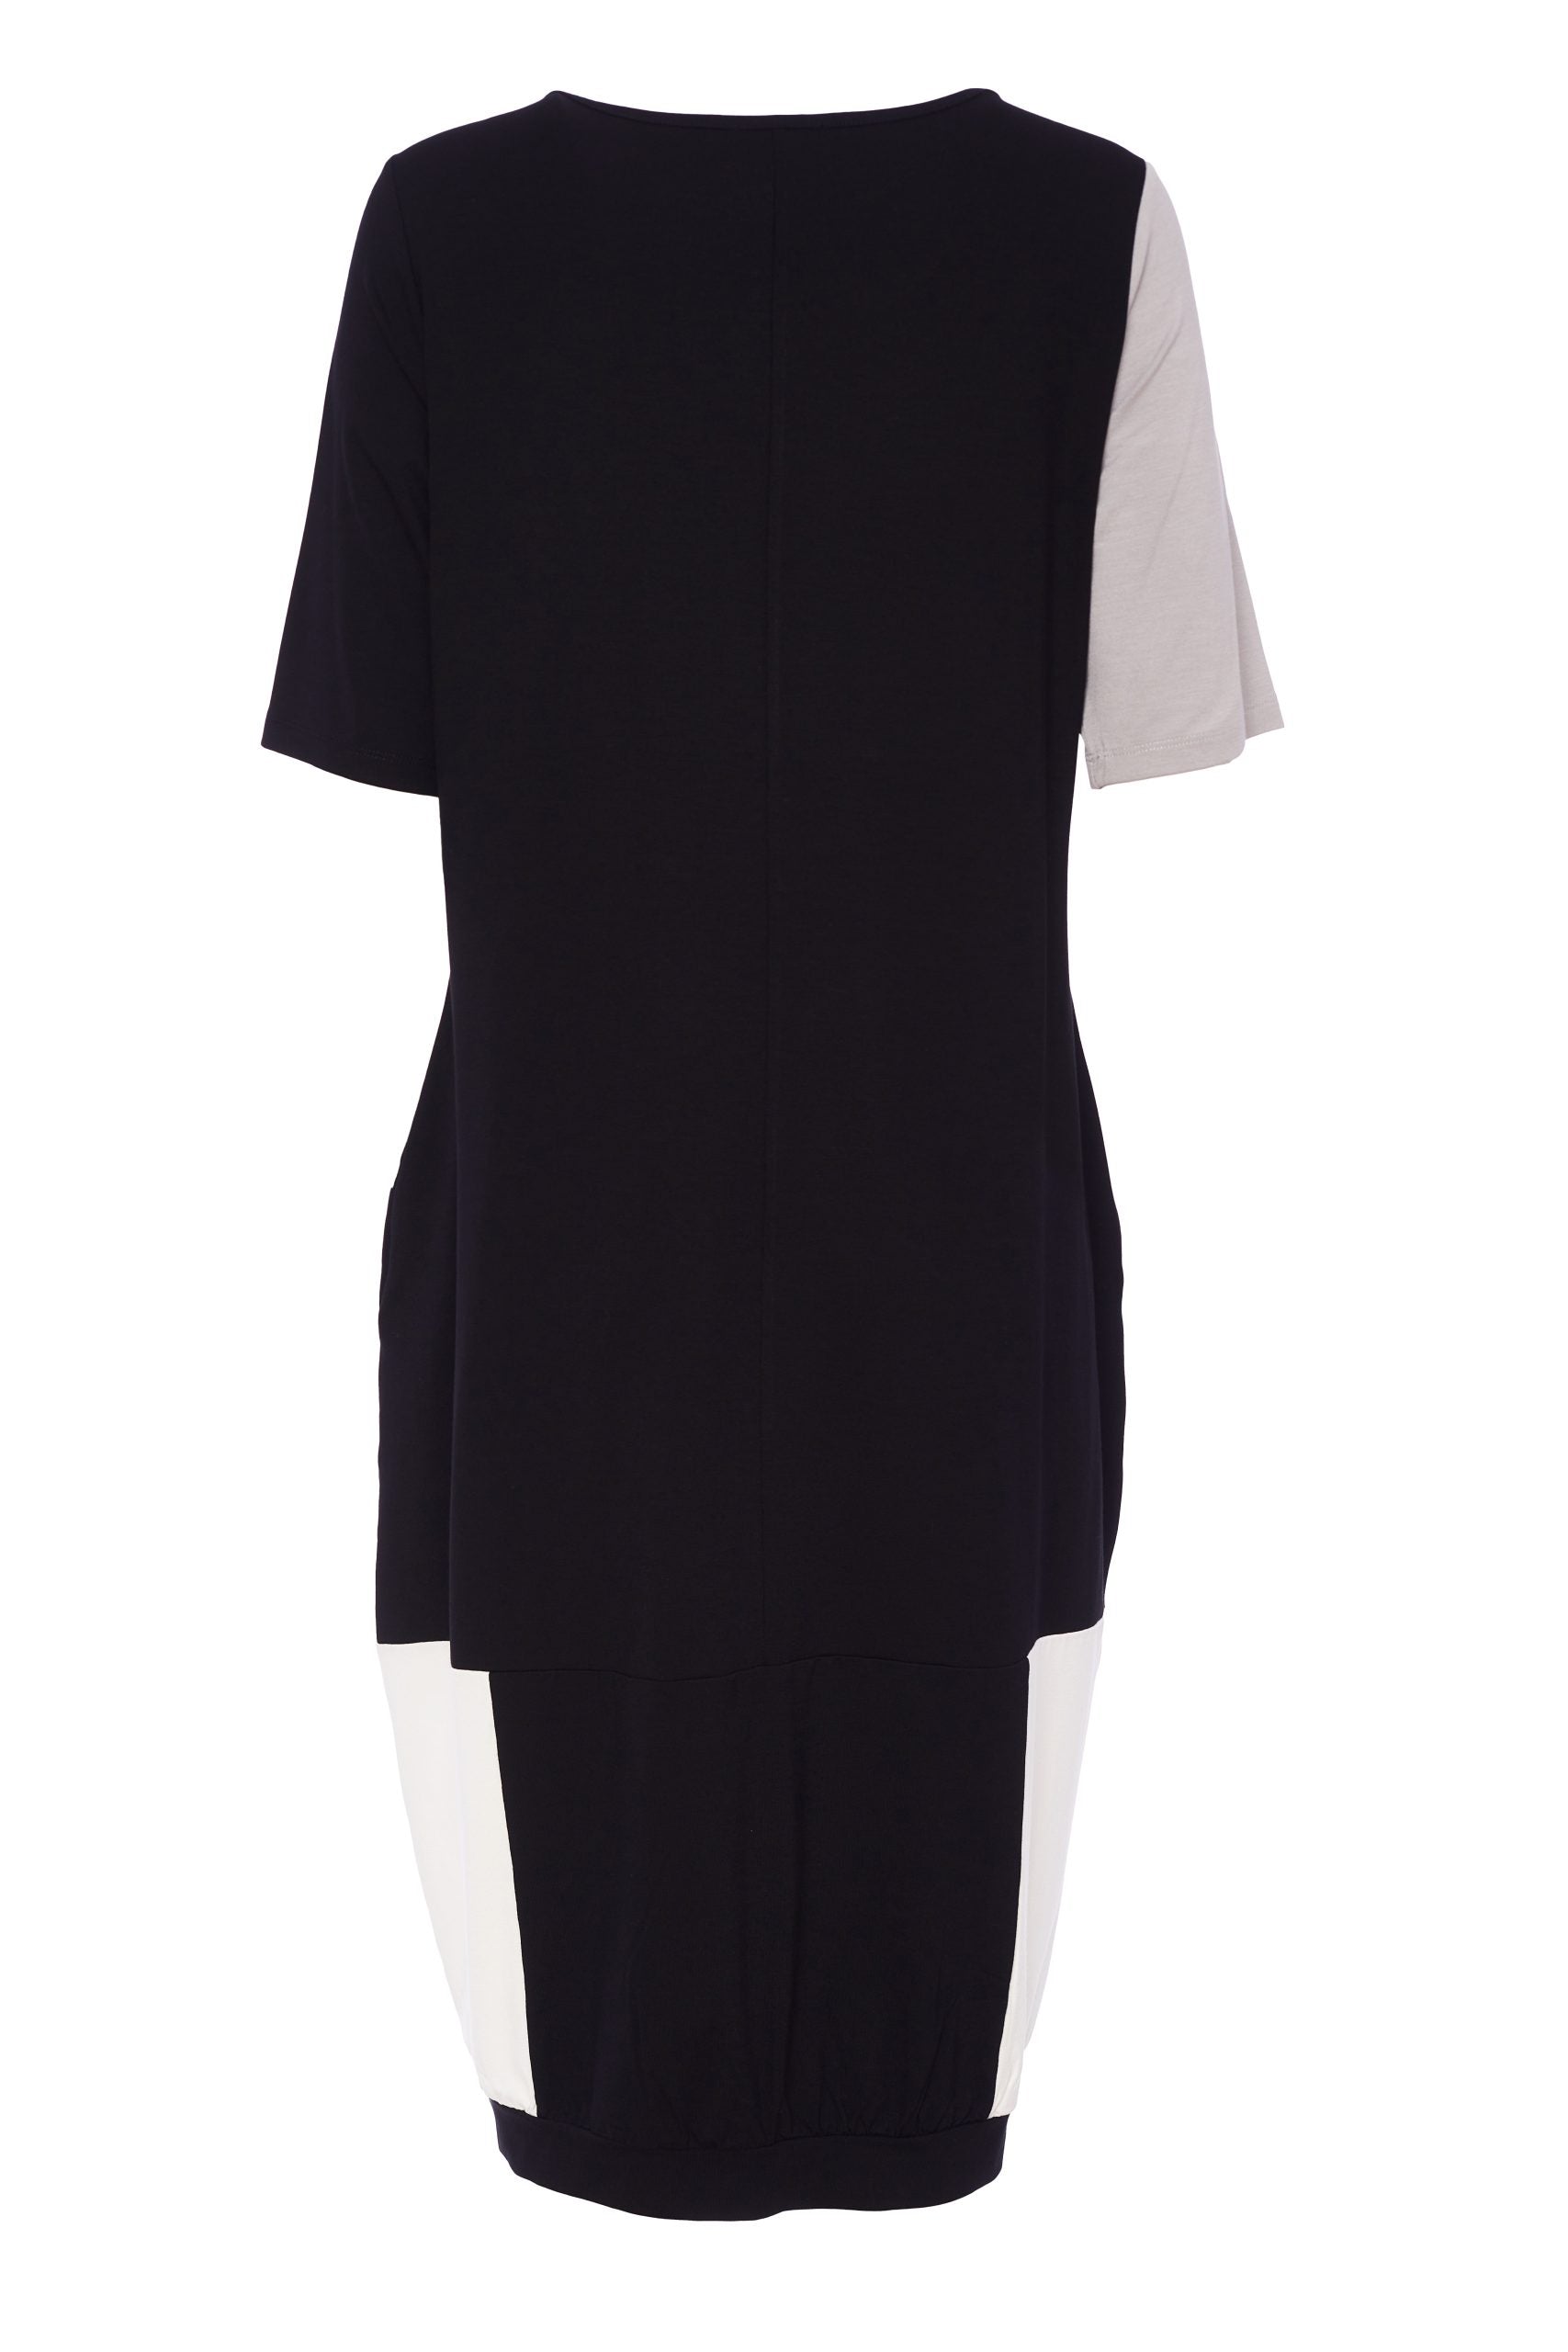 Block Colour Jersey Dress in Mink/Black